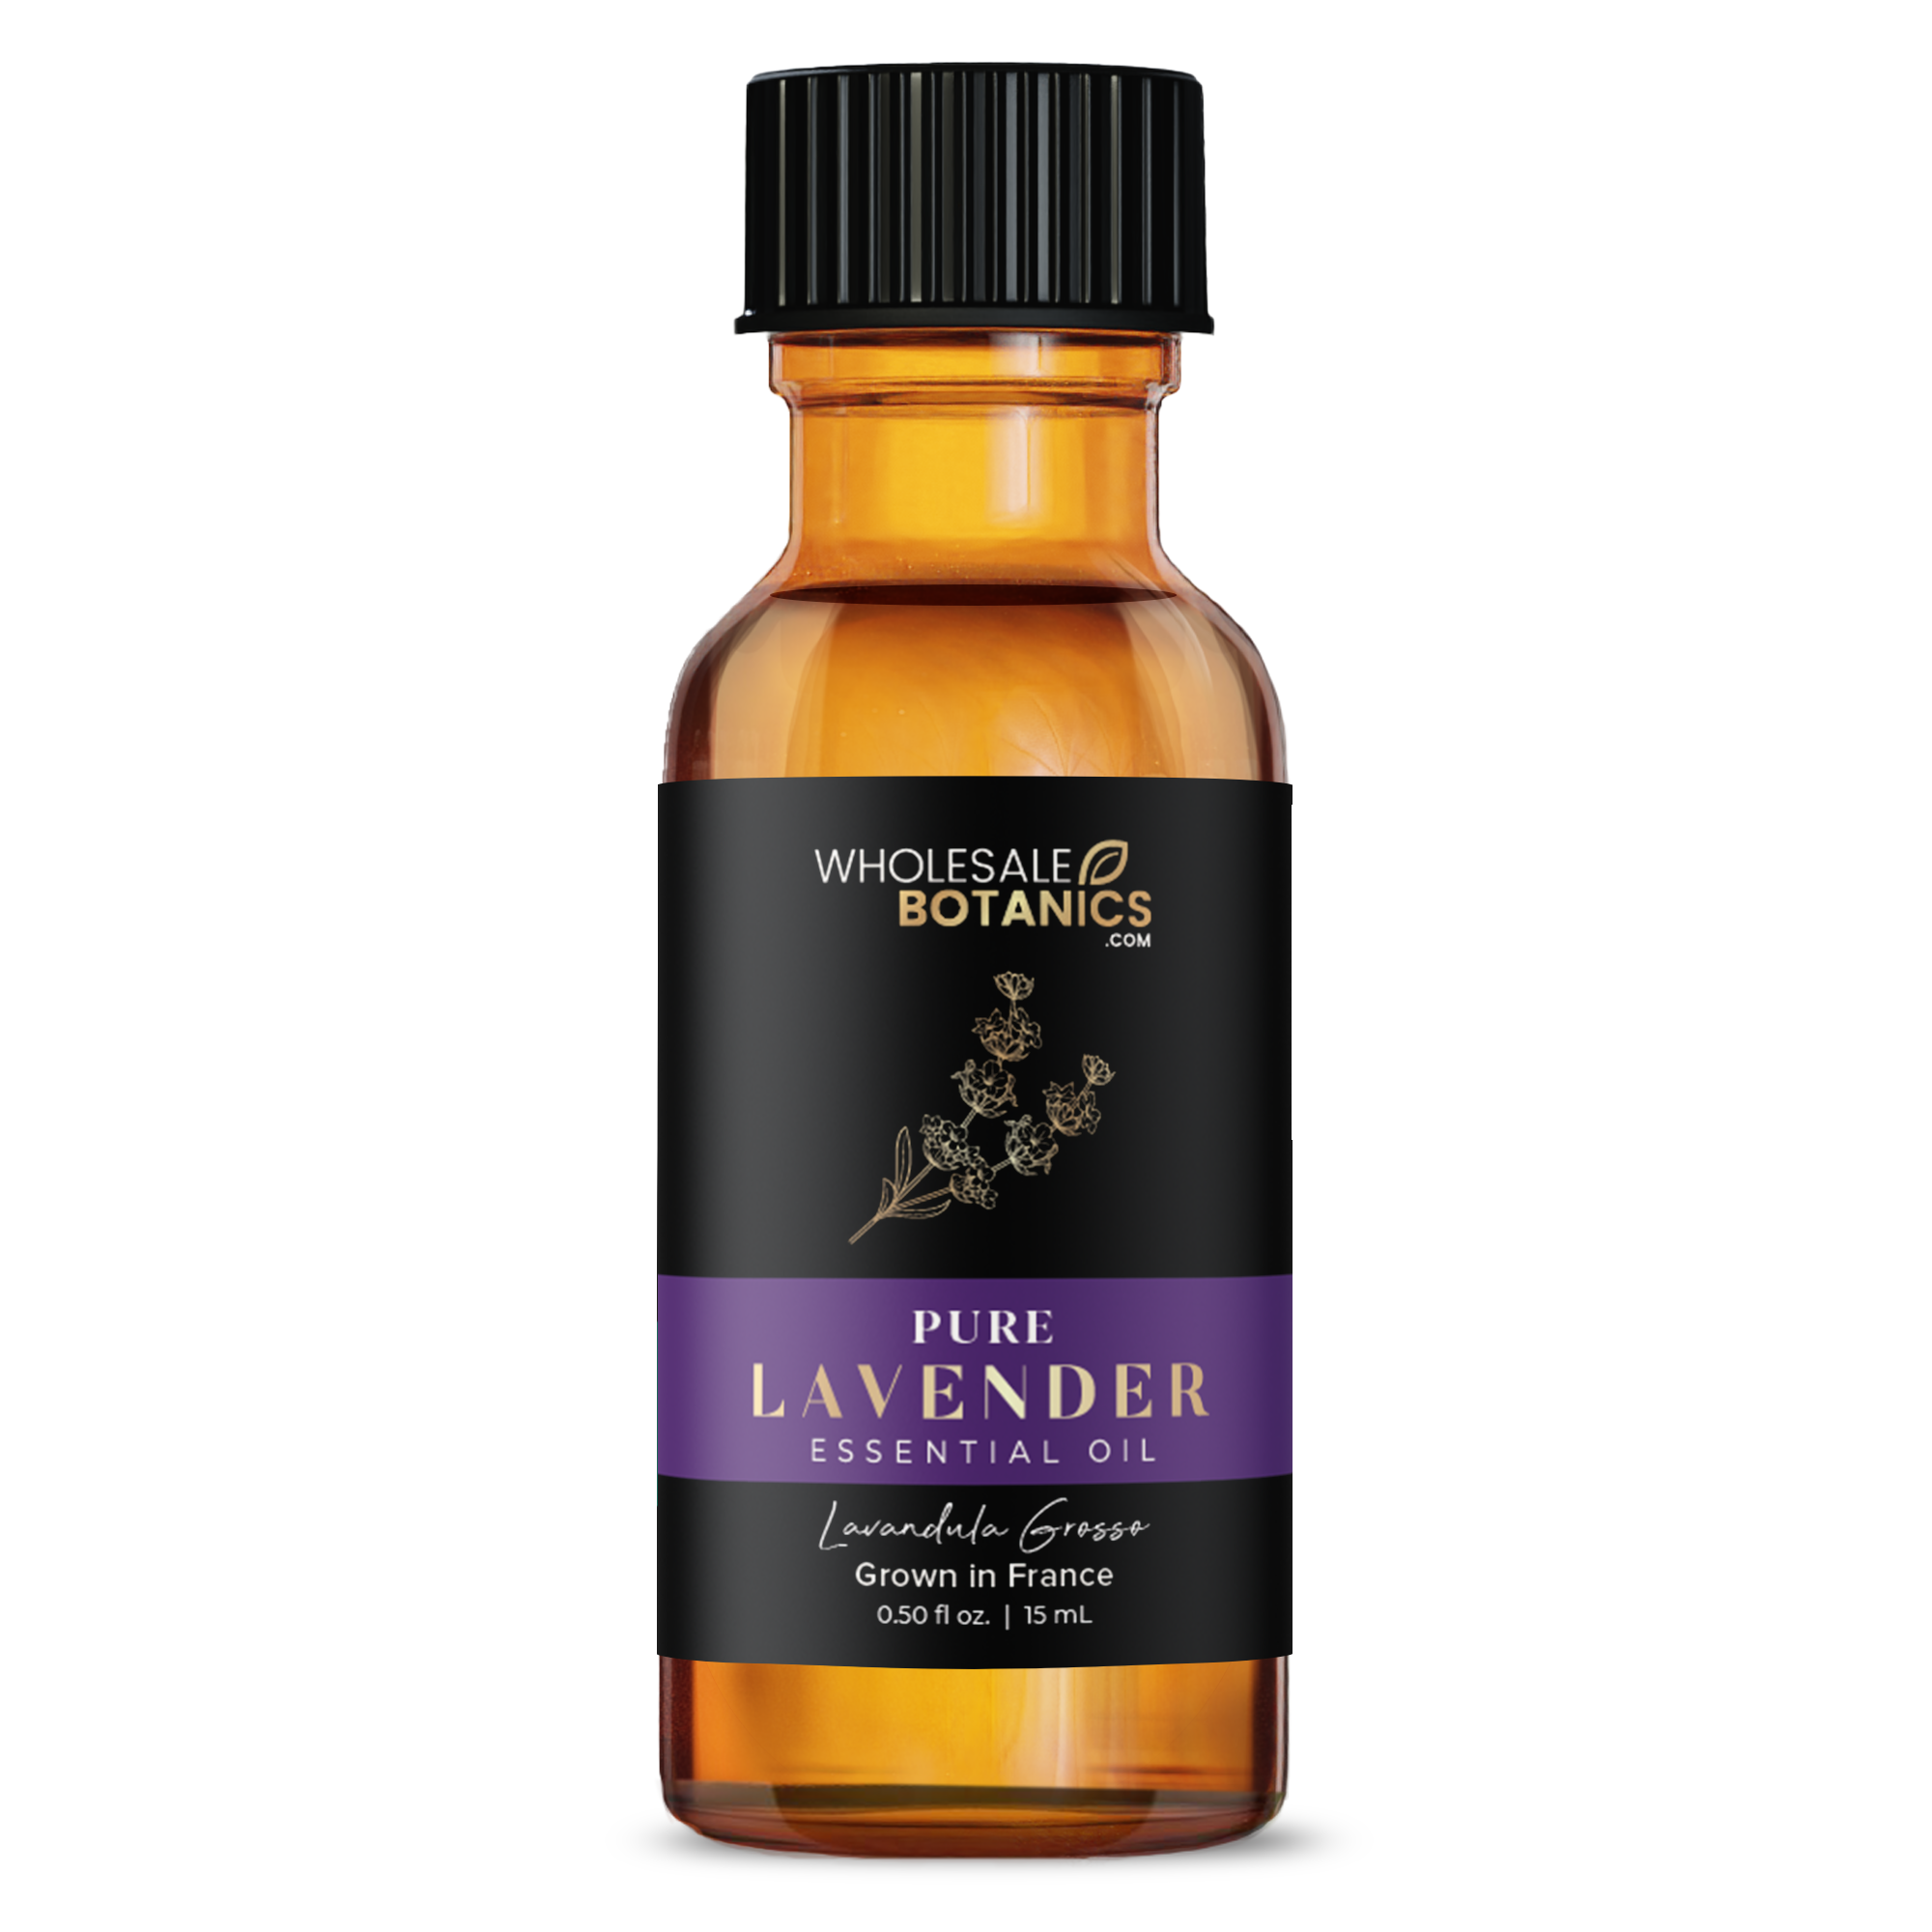 Purity Lavender Essential Oil - Lavandin Grosso - France - .5 oz